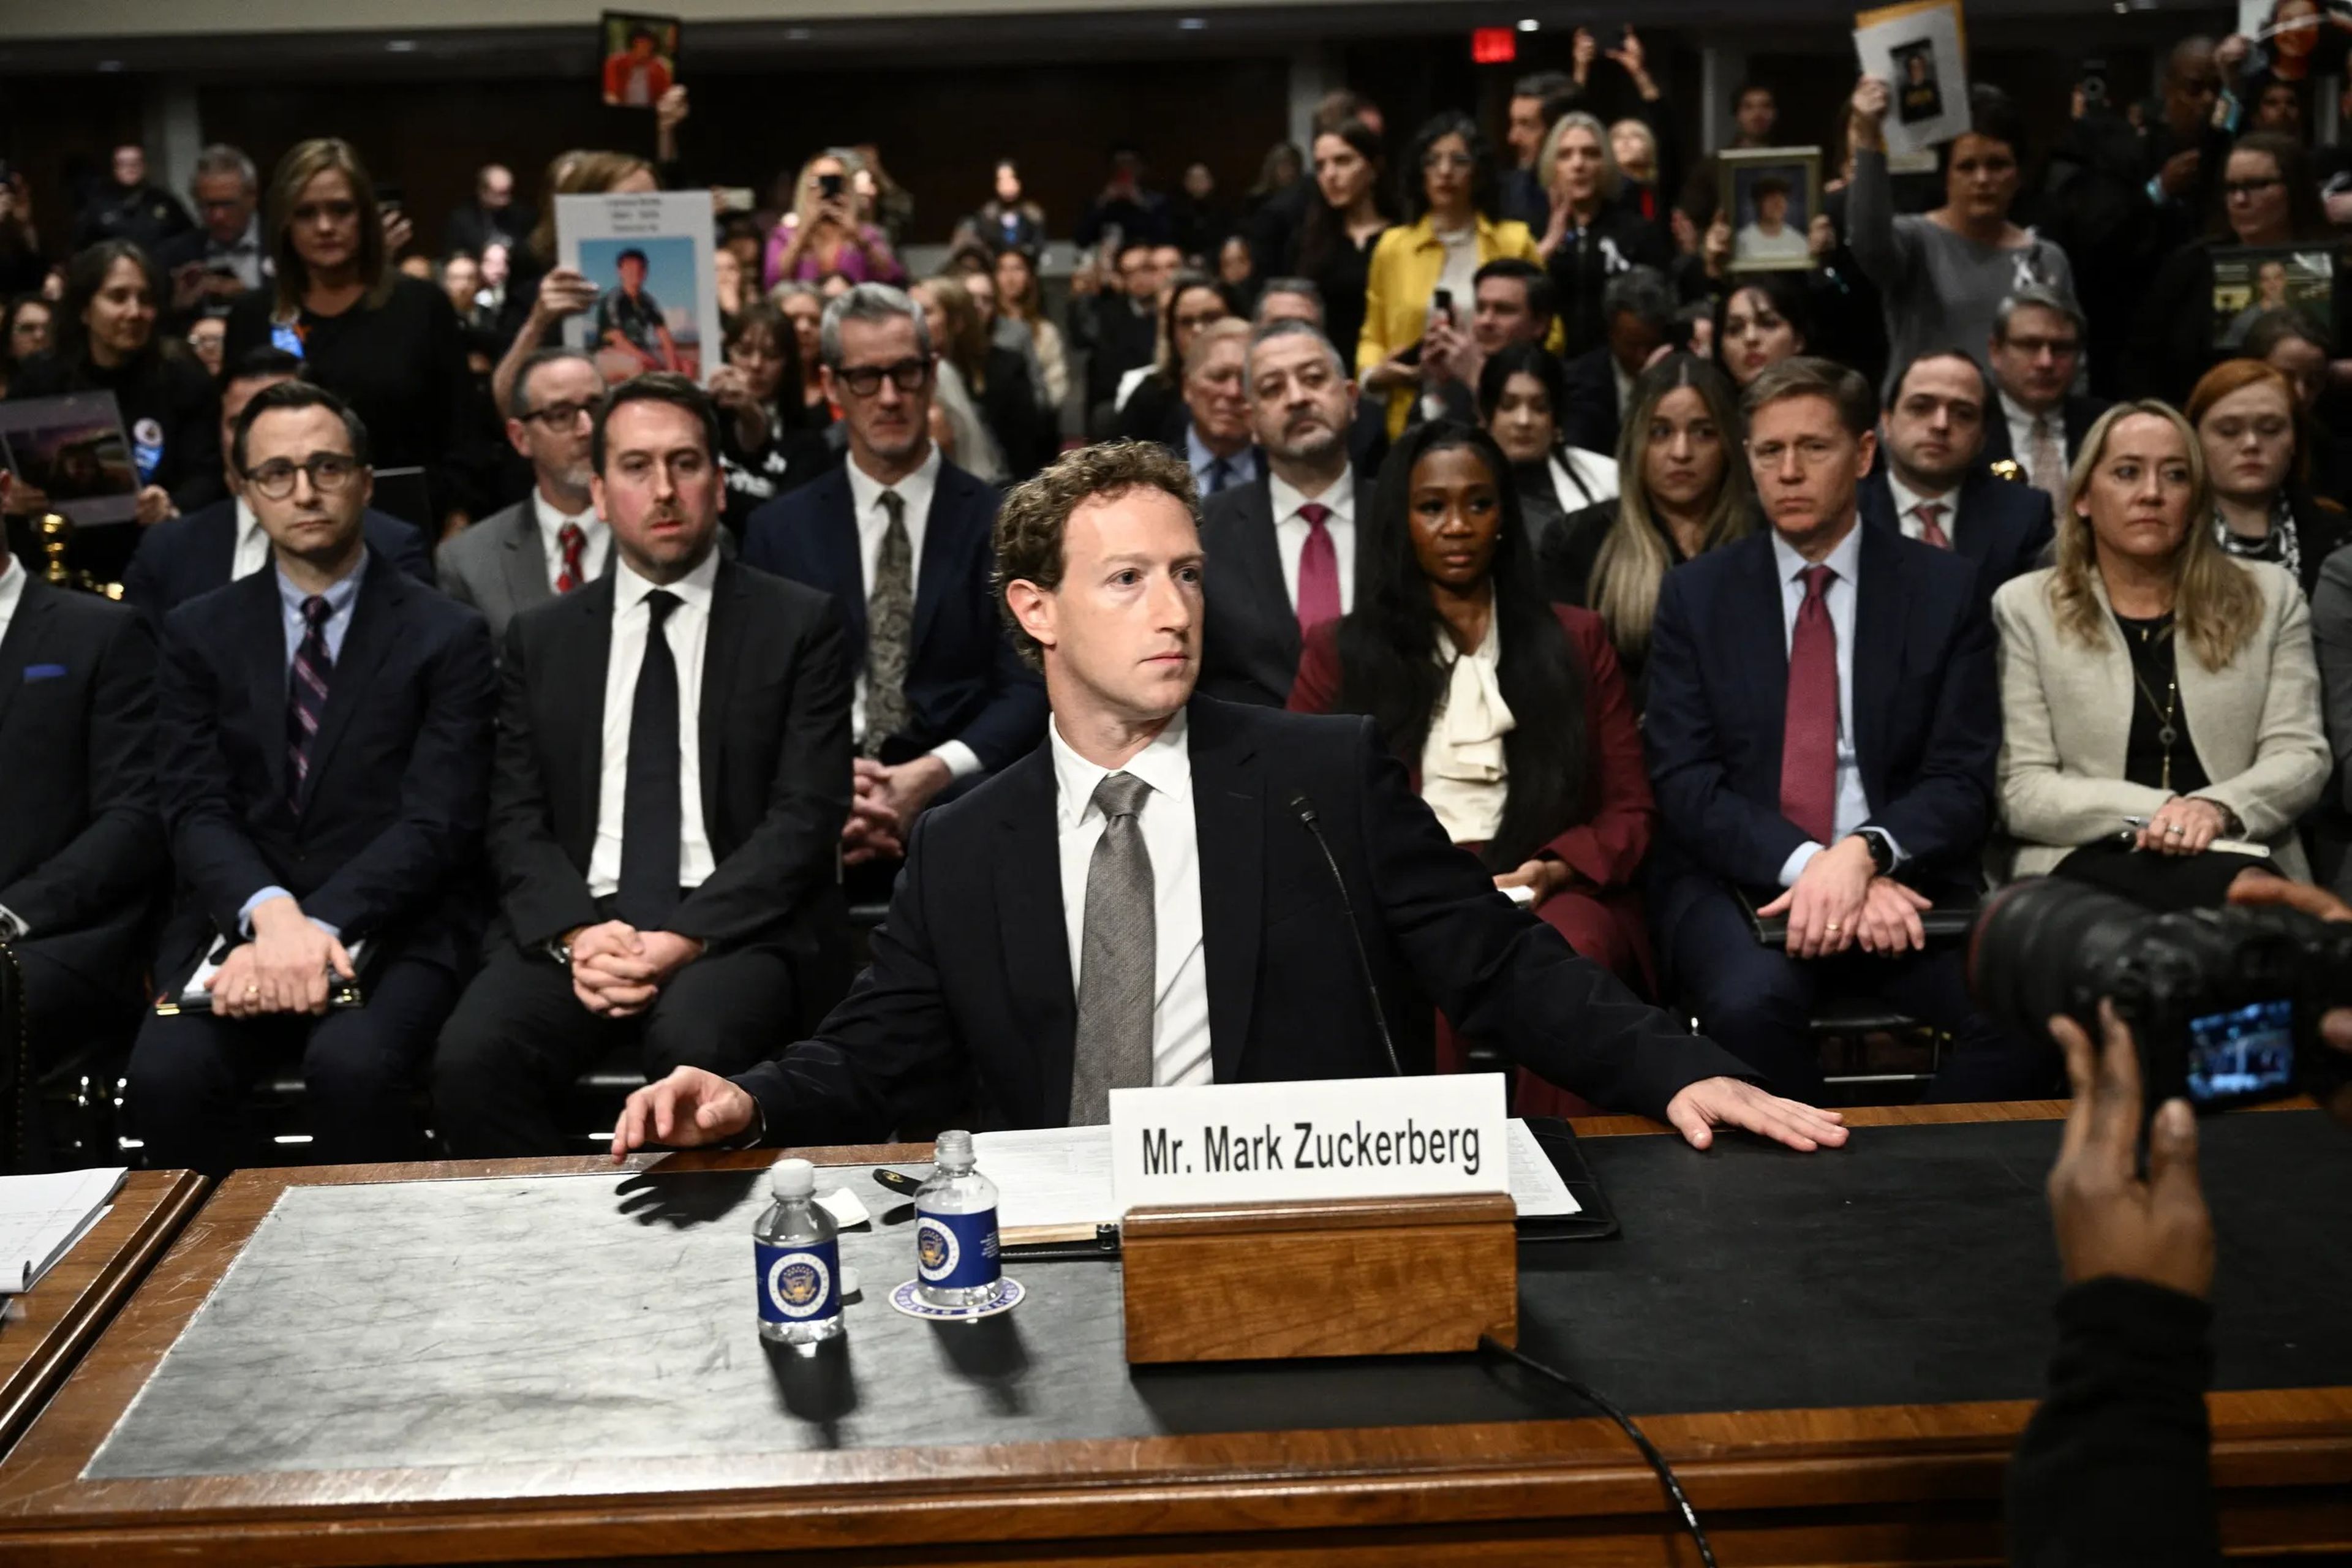 Mark Zuckerberg, CEO of Meta, looks on during the US Senate Judiciary Committee